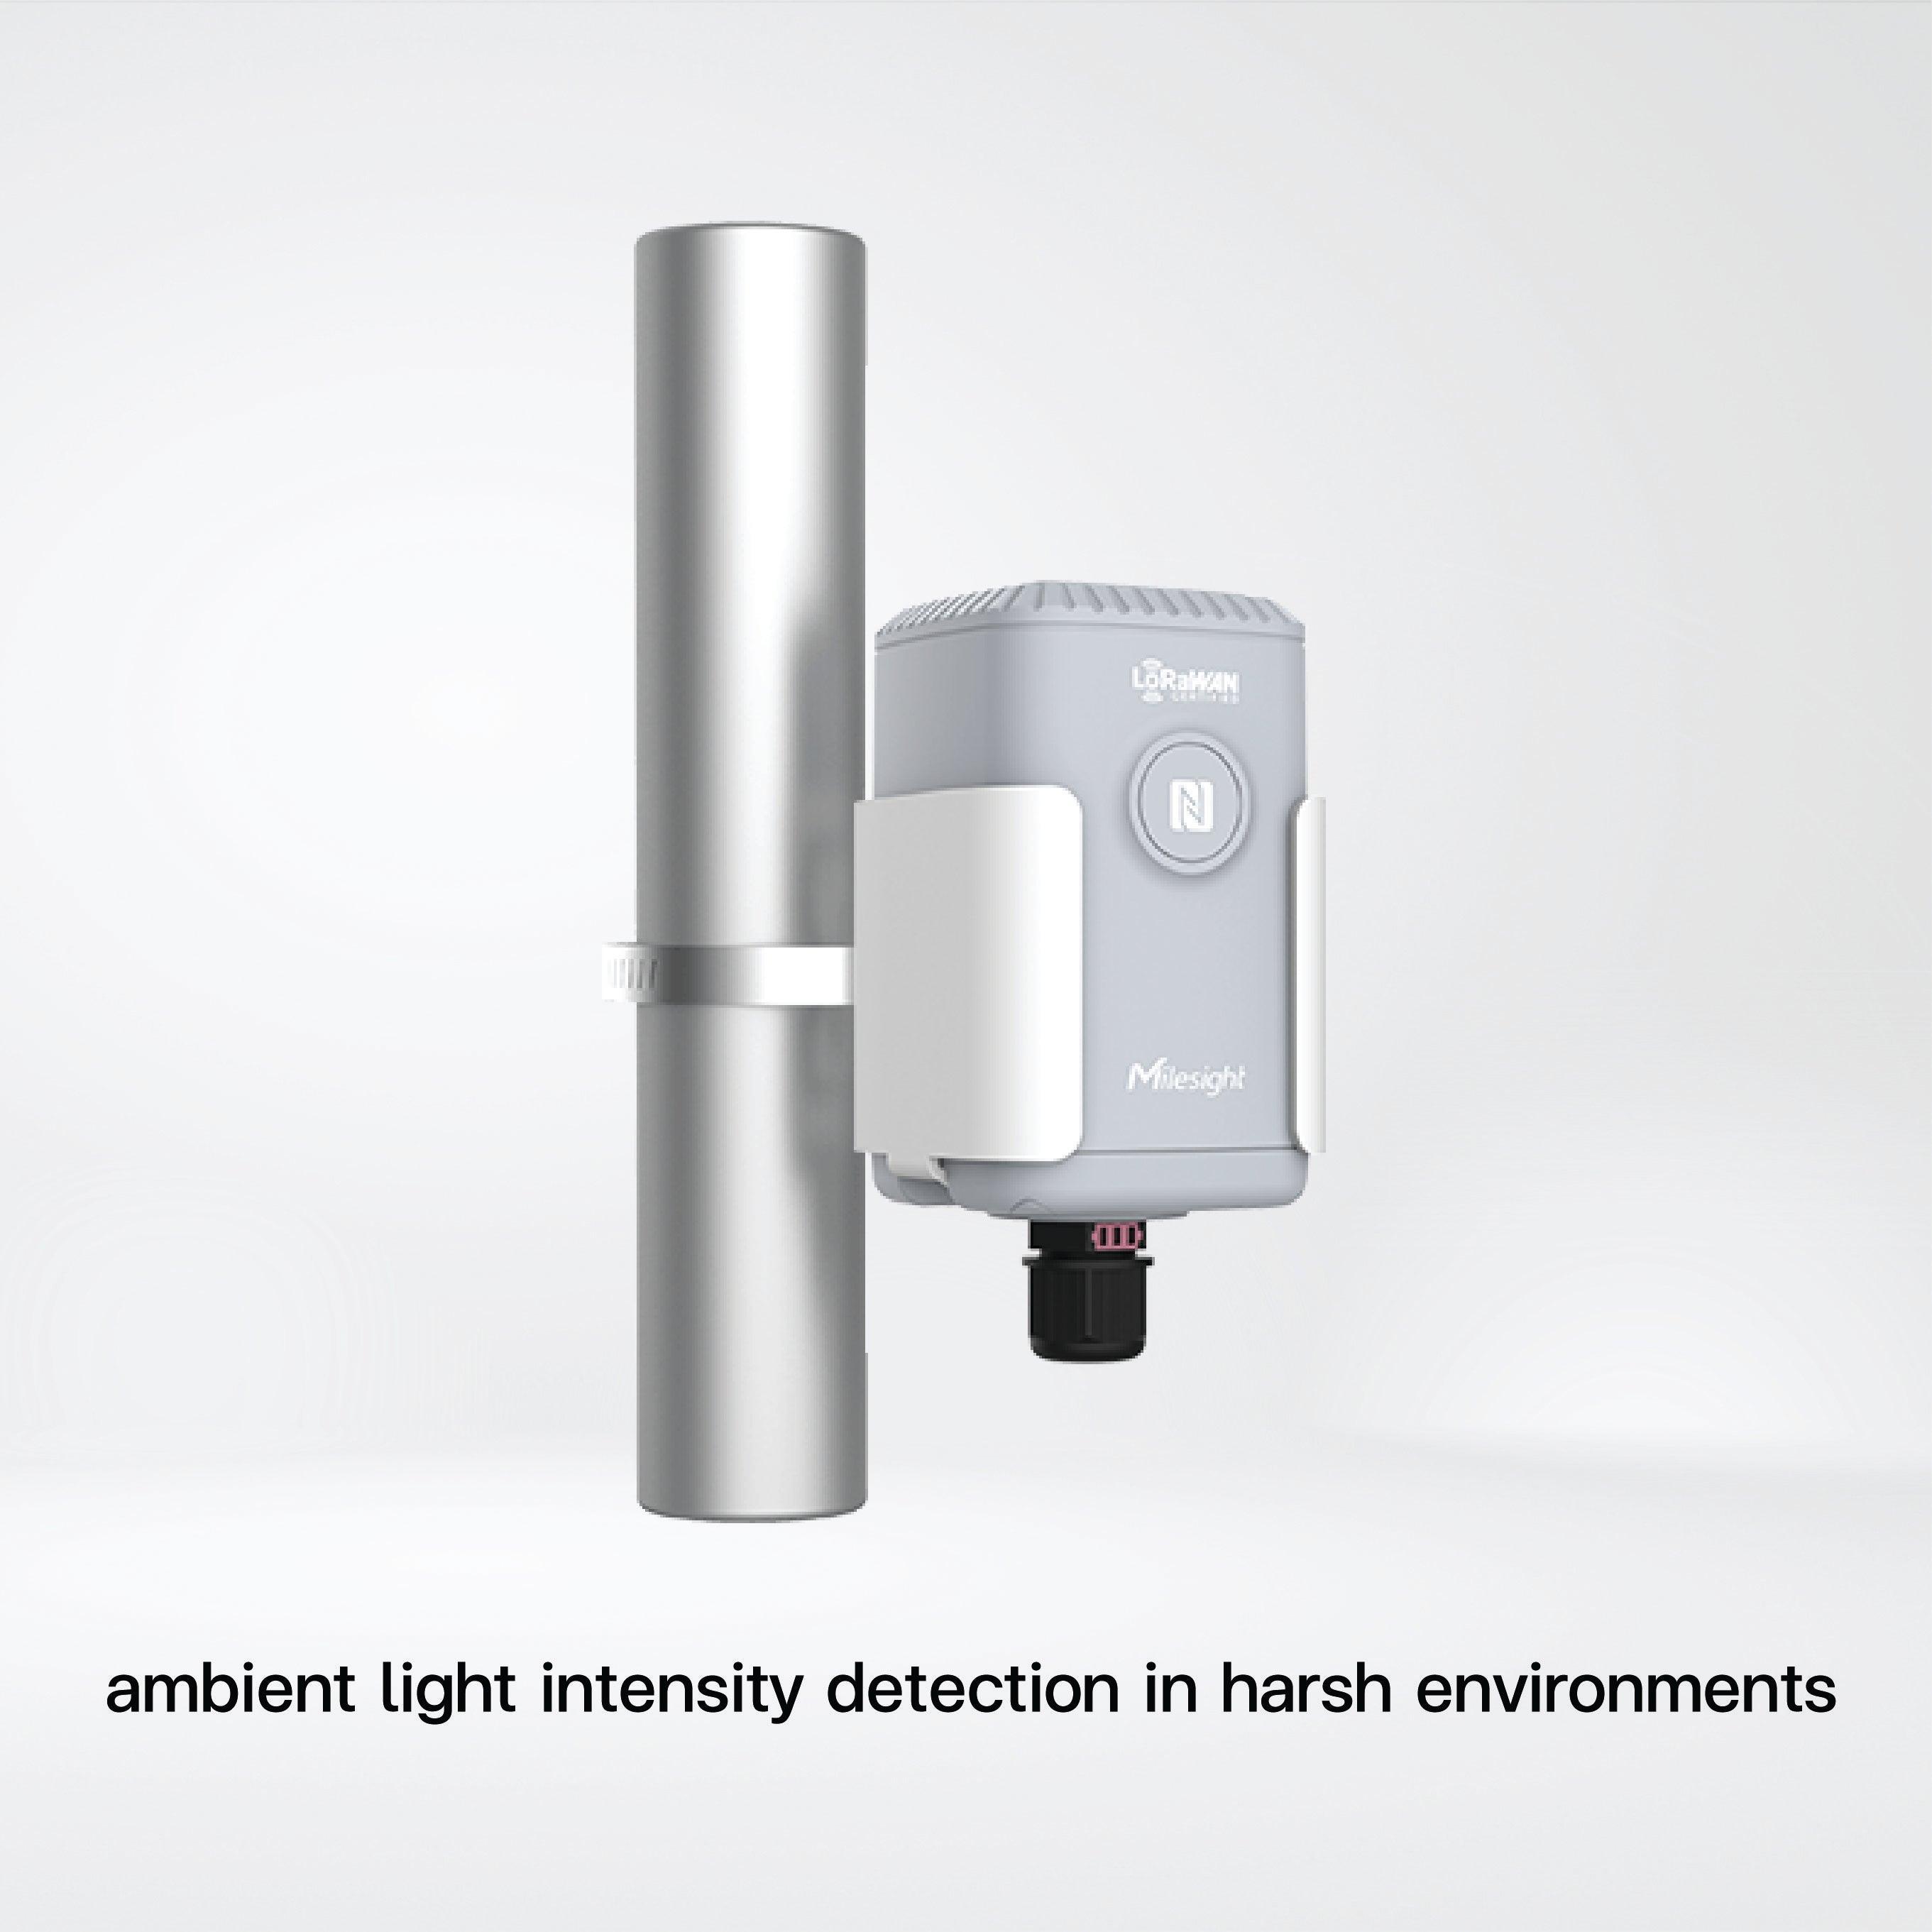 EM500-LGT Light Sensor - Riverplus